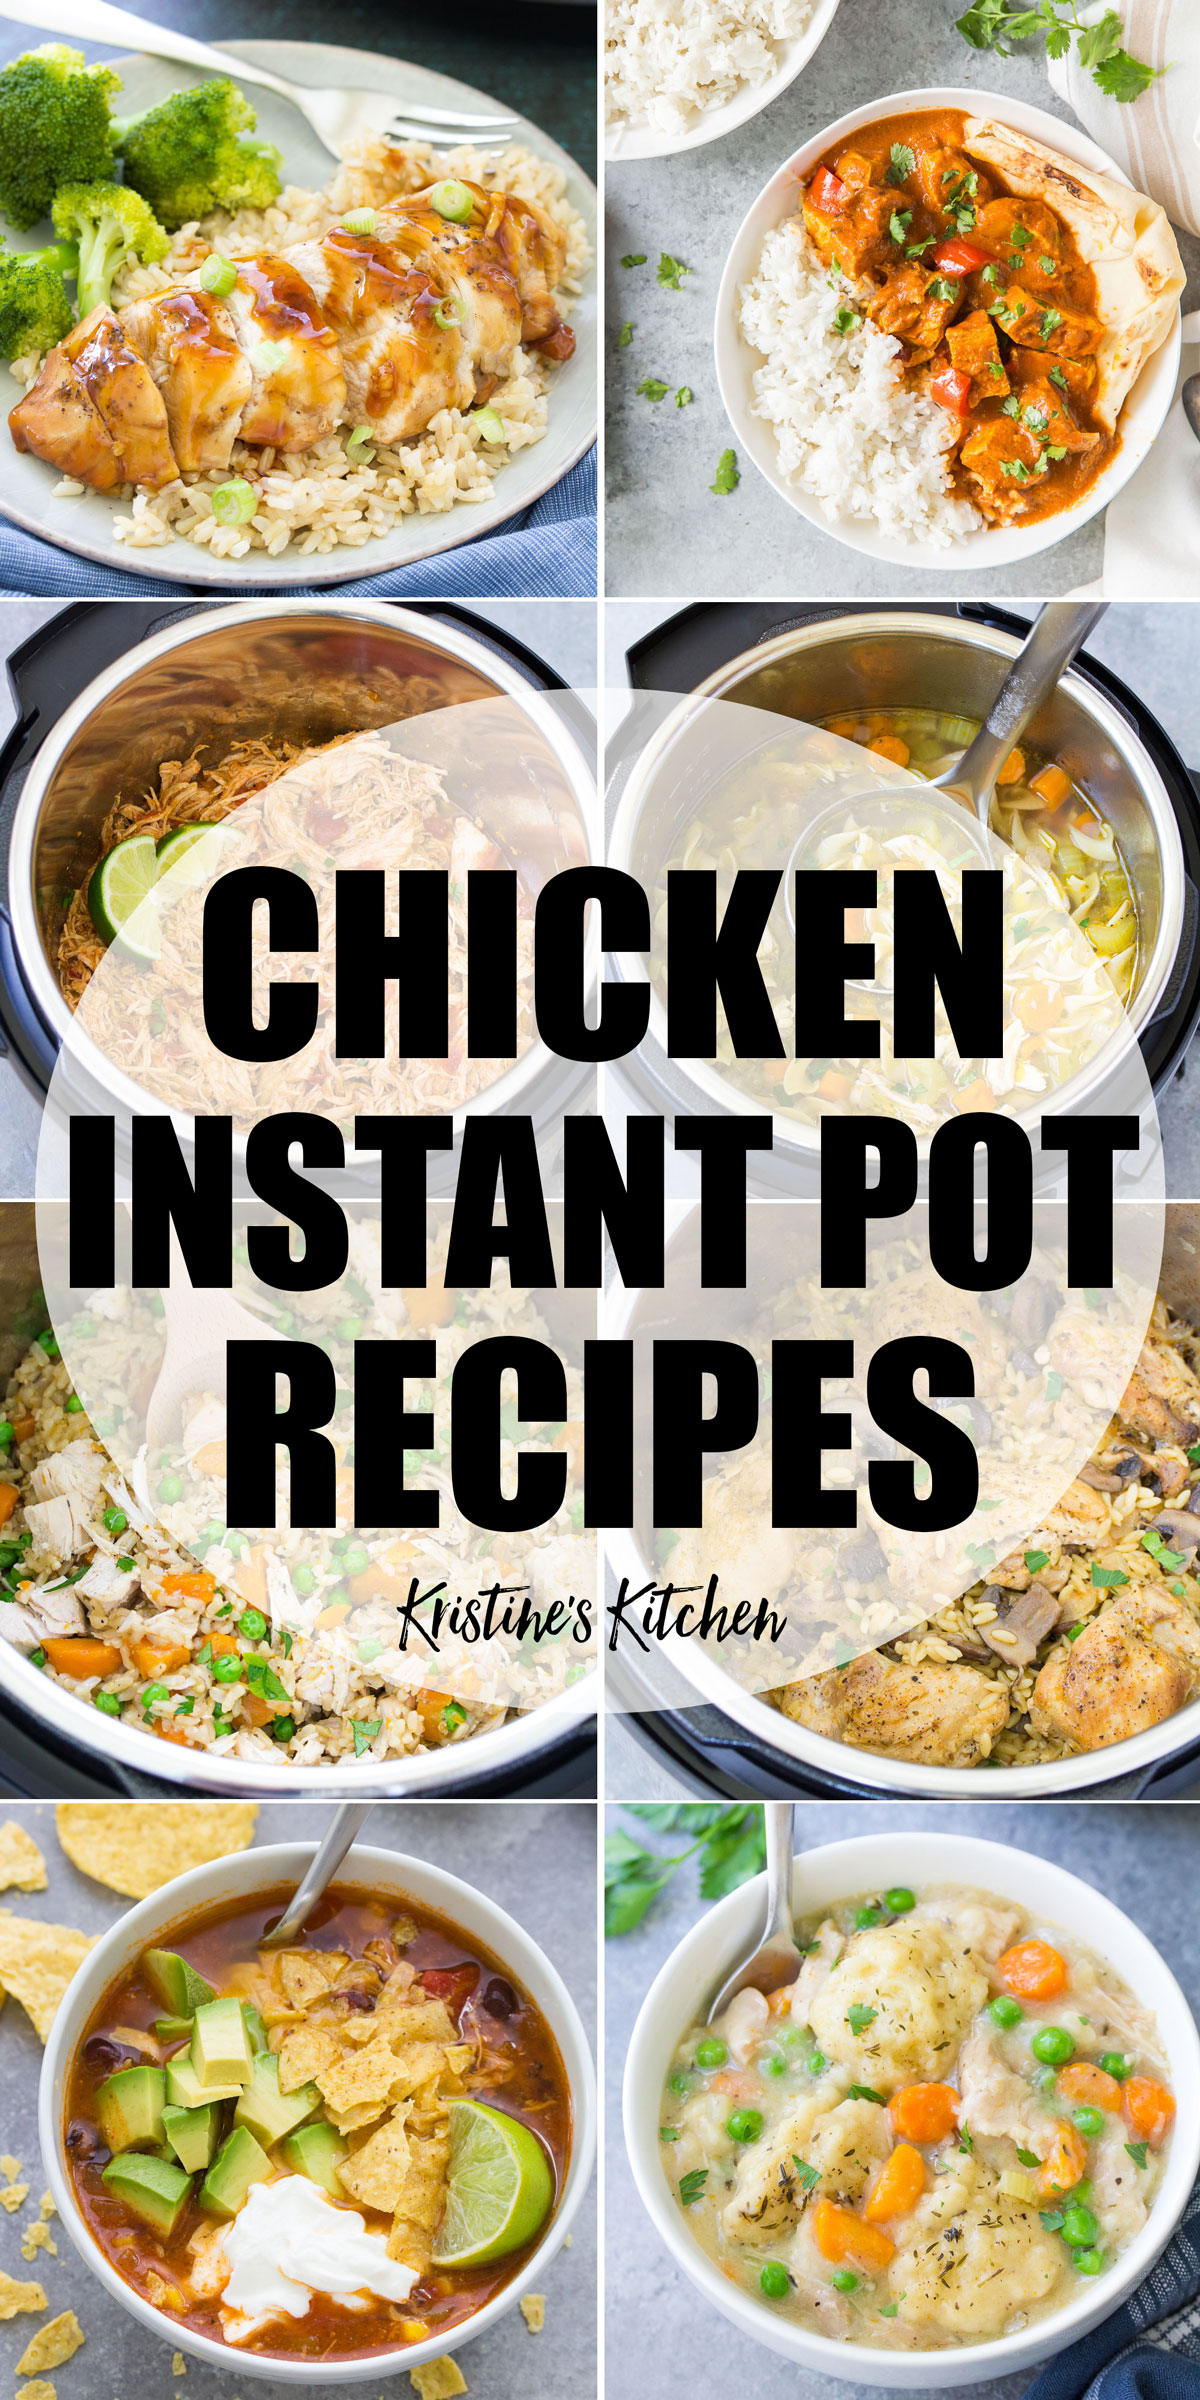 https://kristineskitchenblog.com/wp-content/uploads/2019/02/Instant-Pot-Chicken-Recipes-Photo-Collage.jpg